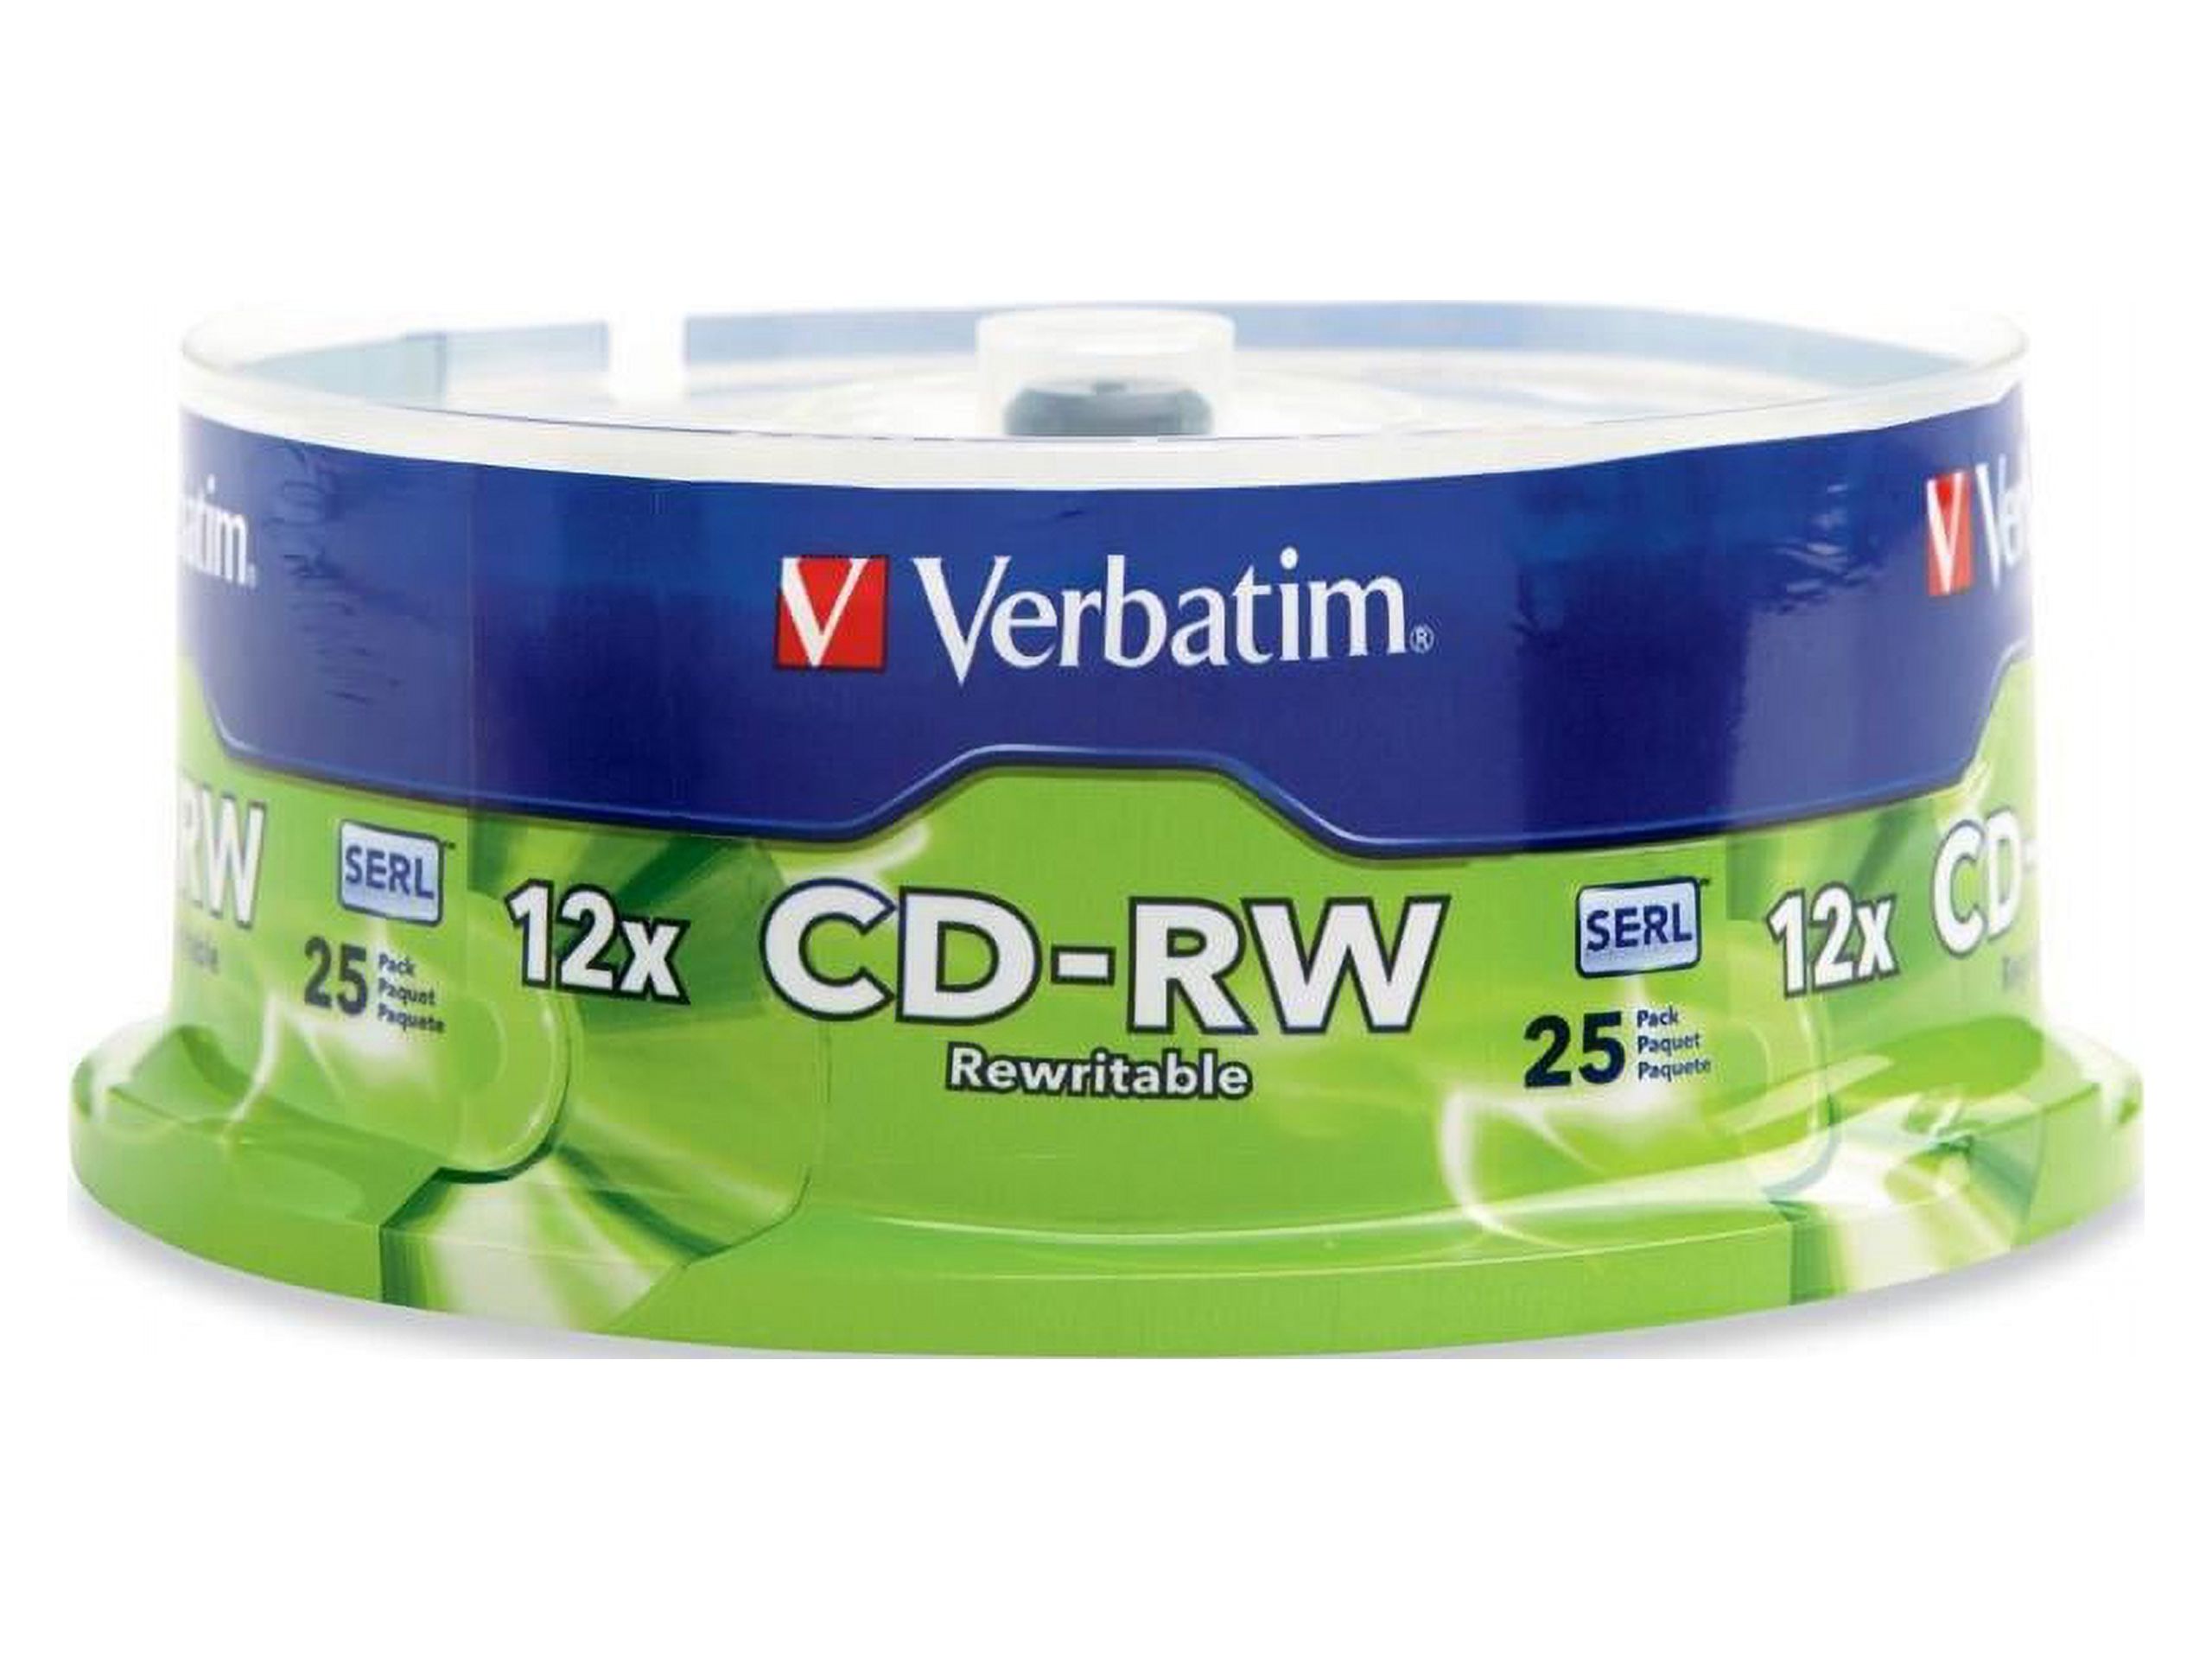 Verbatim 700MB 12X CD-RW 25 Packs Spindle Media Model 95155 - image 1 of 2